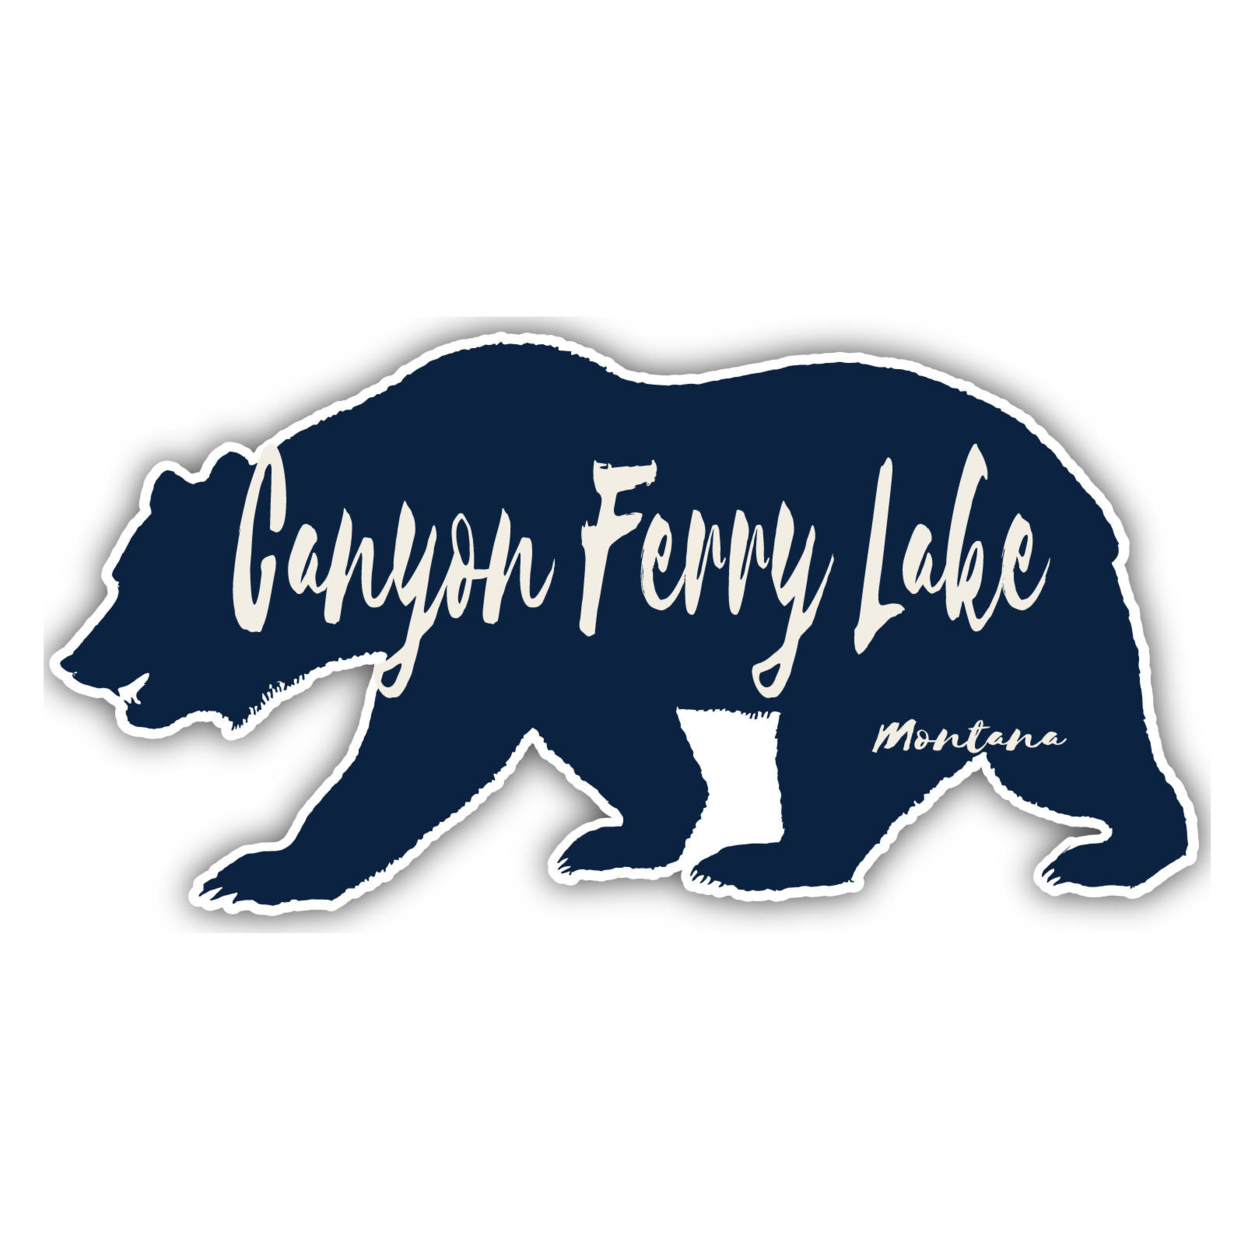 Canyon Ferry Lake Montana Souvenir Decorative Stickers (Choose Theme And Size) - 4-Pack, 2-Inch, Bear